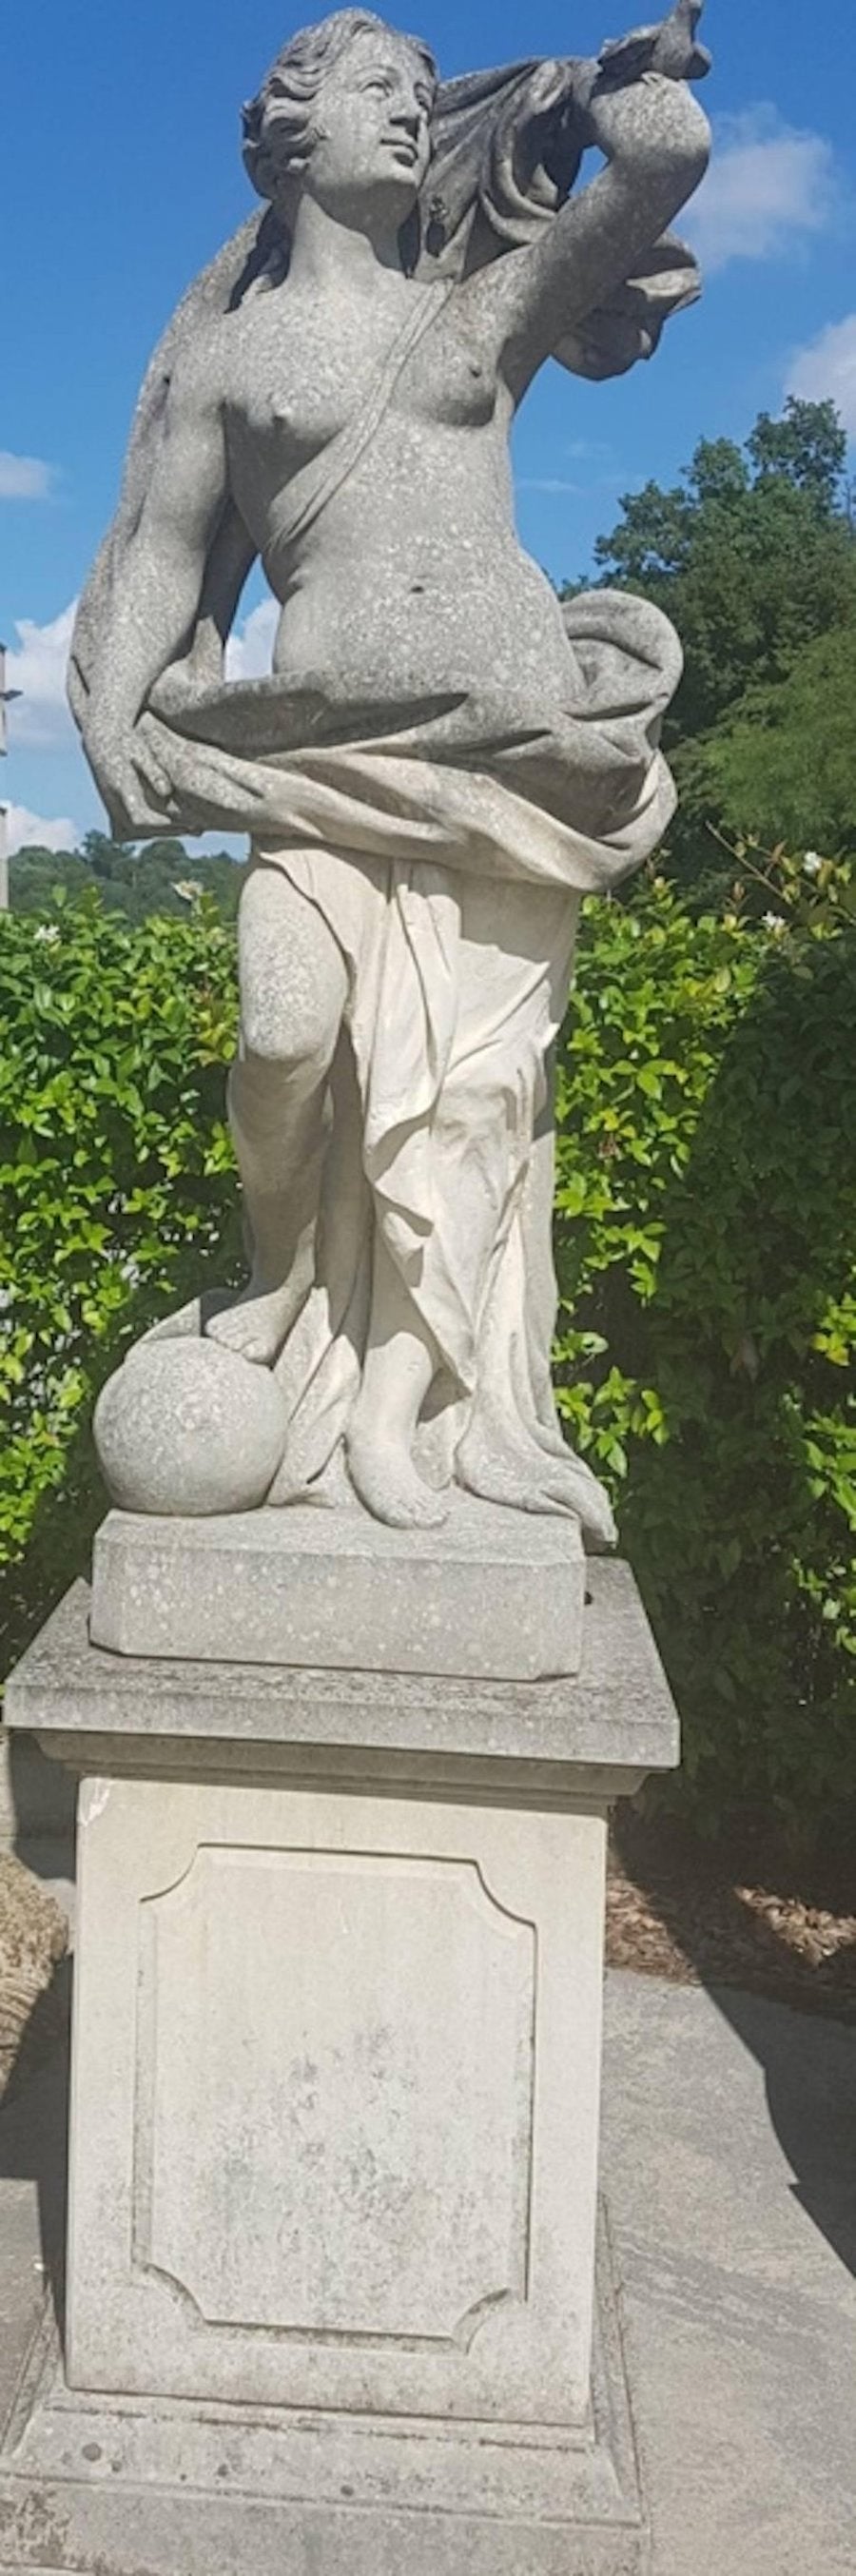 Italian Stone Garden Sculpture of Roman Mythological Subject Aria For Sale